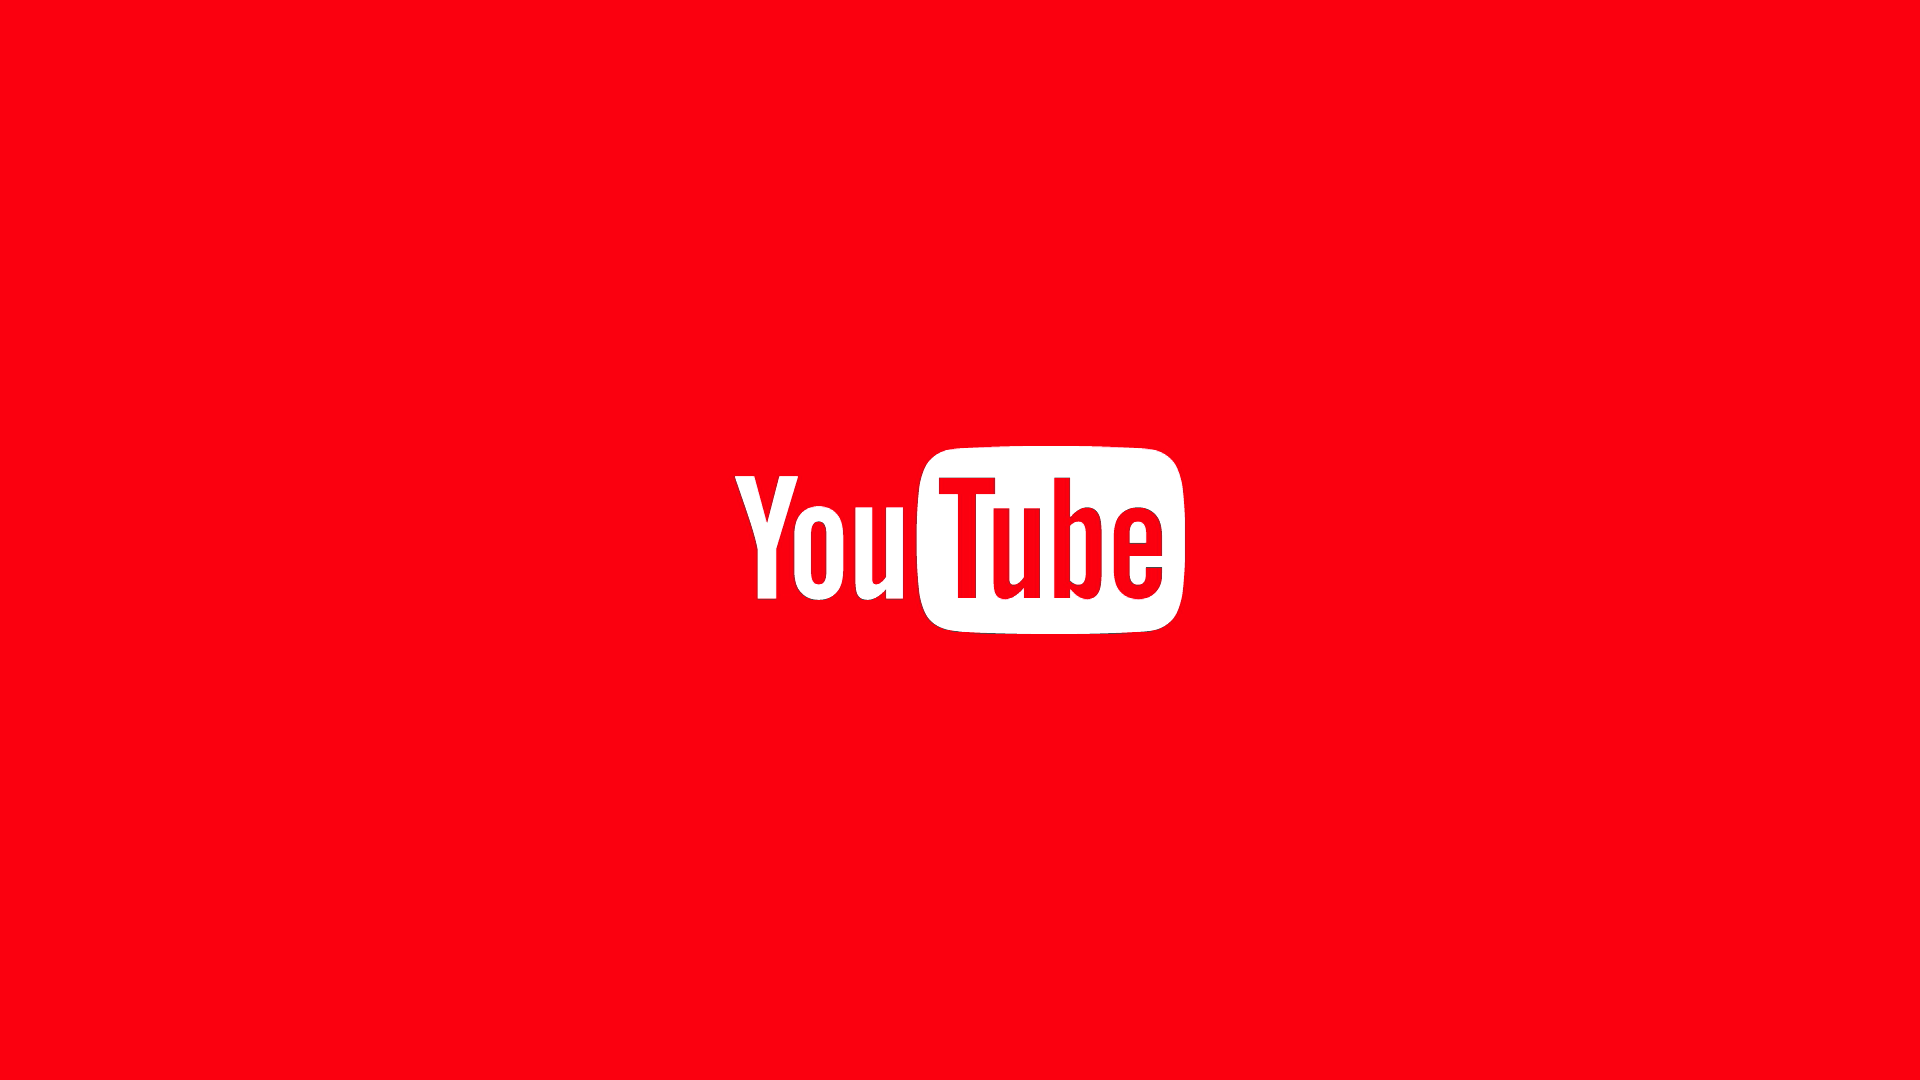 Wallpaper Hd Youtube Logo Aesthetic Youtube Logo Largest Wallpaper Images